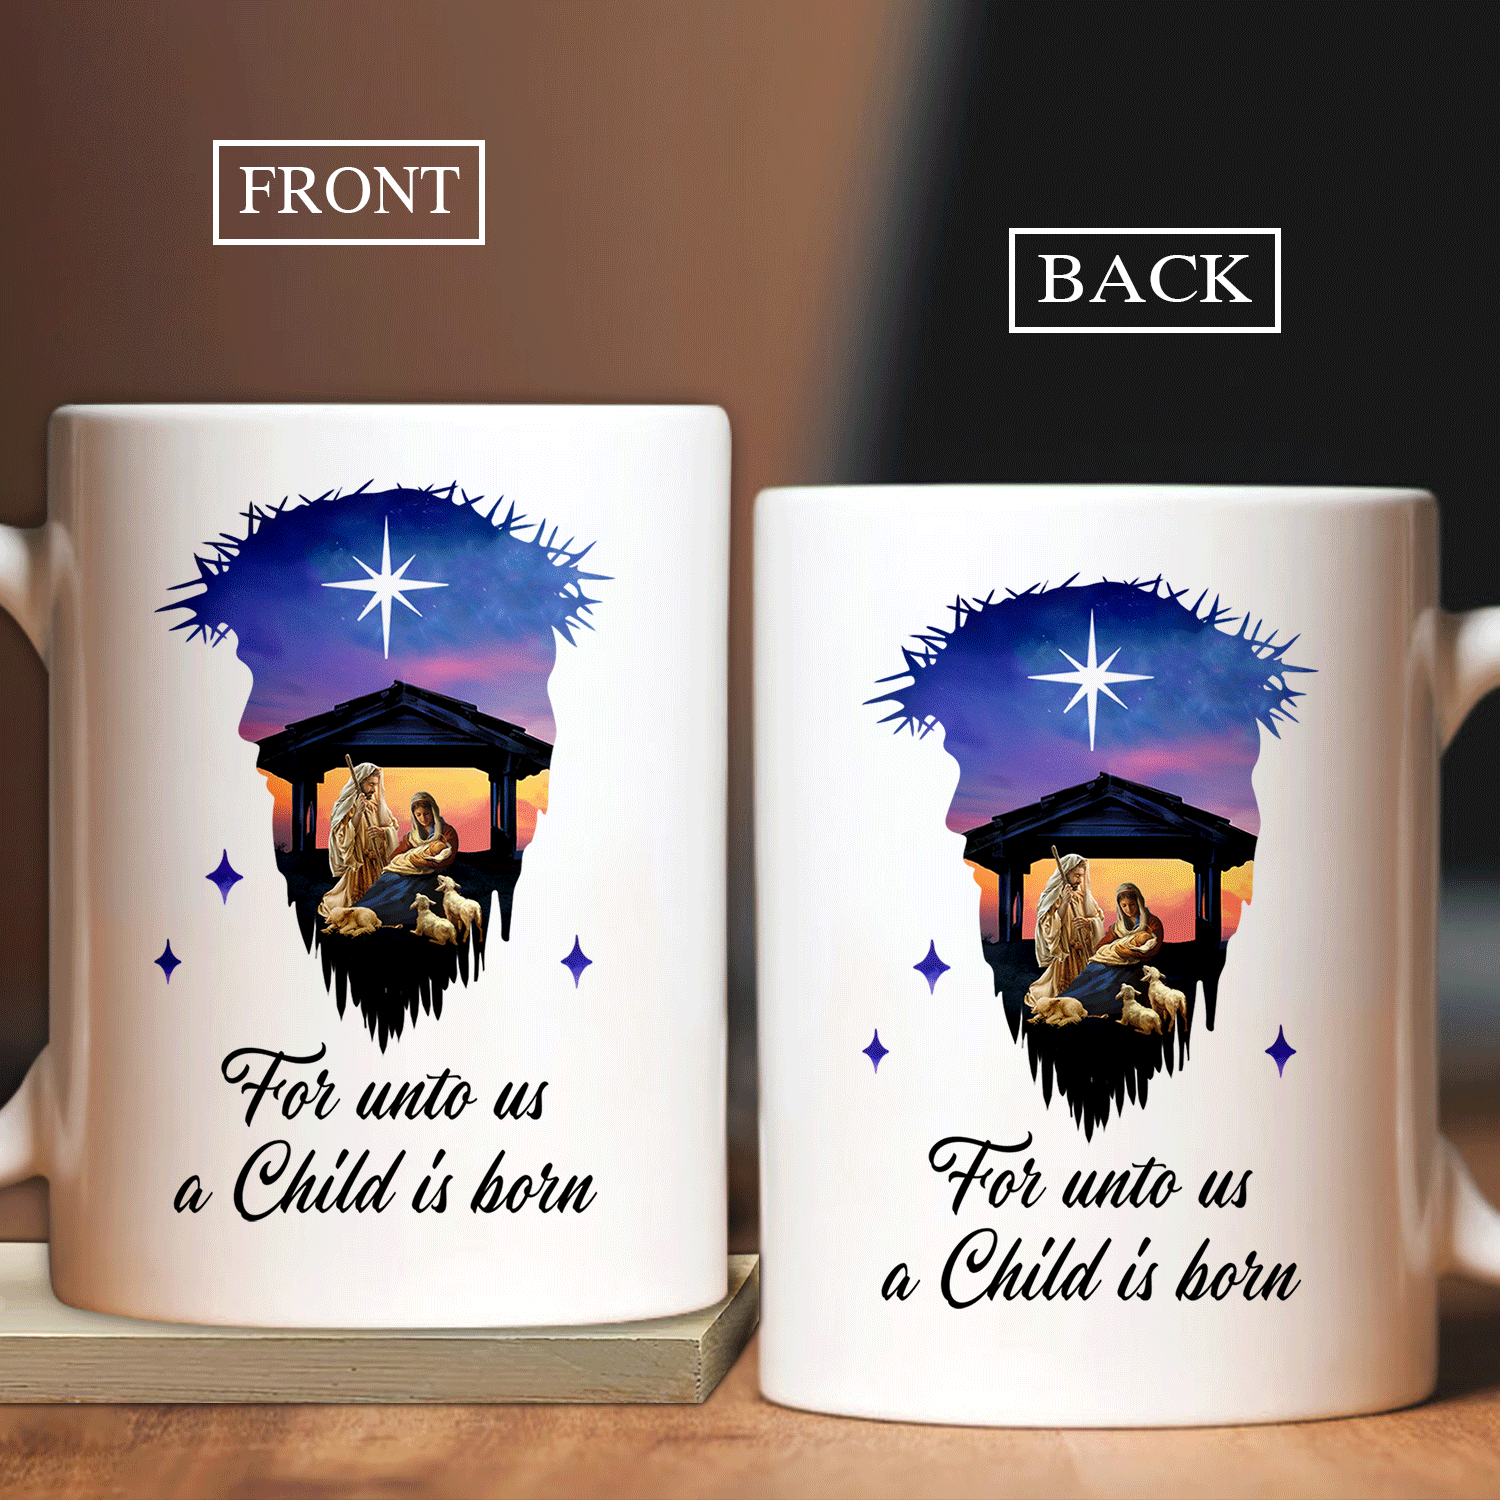 Jesus White Mug- Birth of Jesus, Bright night, Jesus face - Gift For Christian - For unto us a Child is born - White Mug